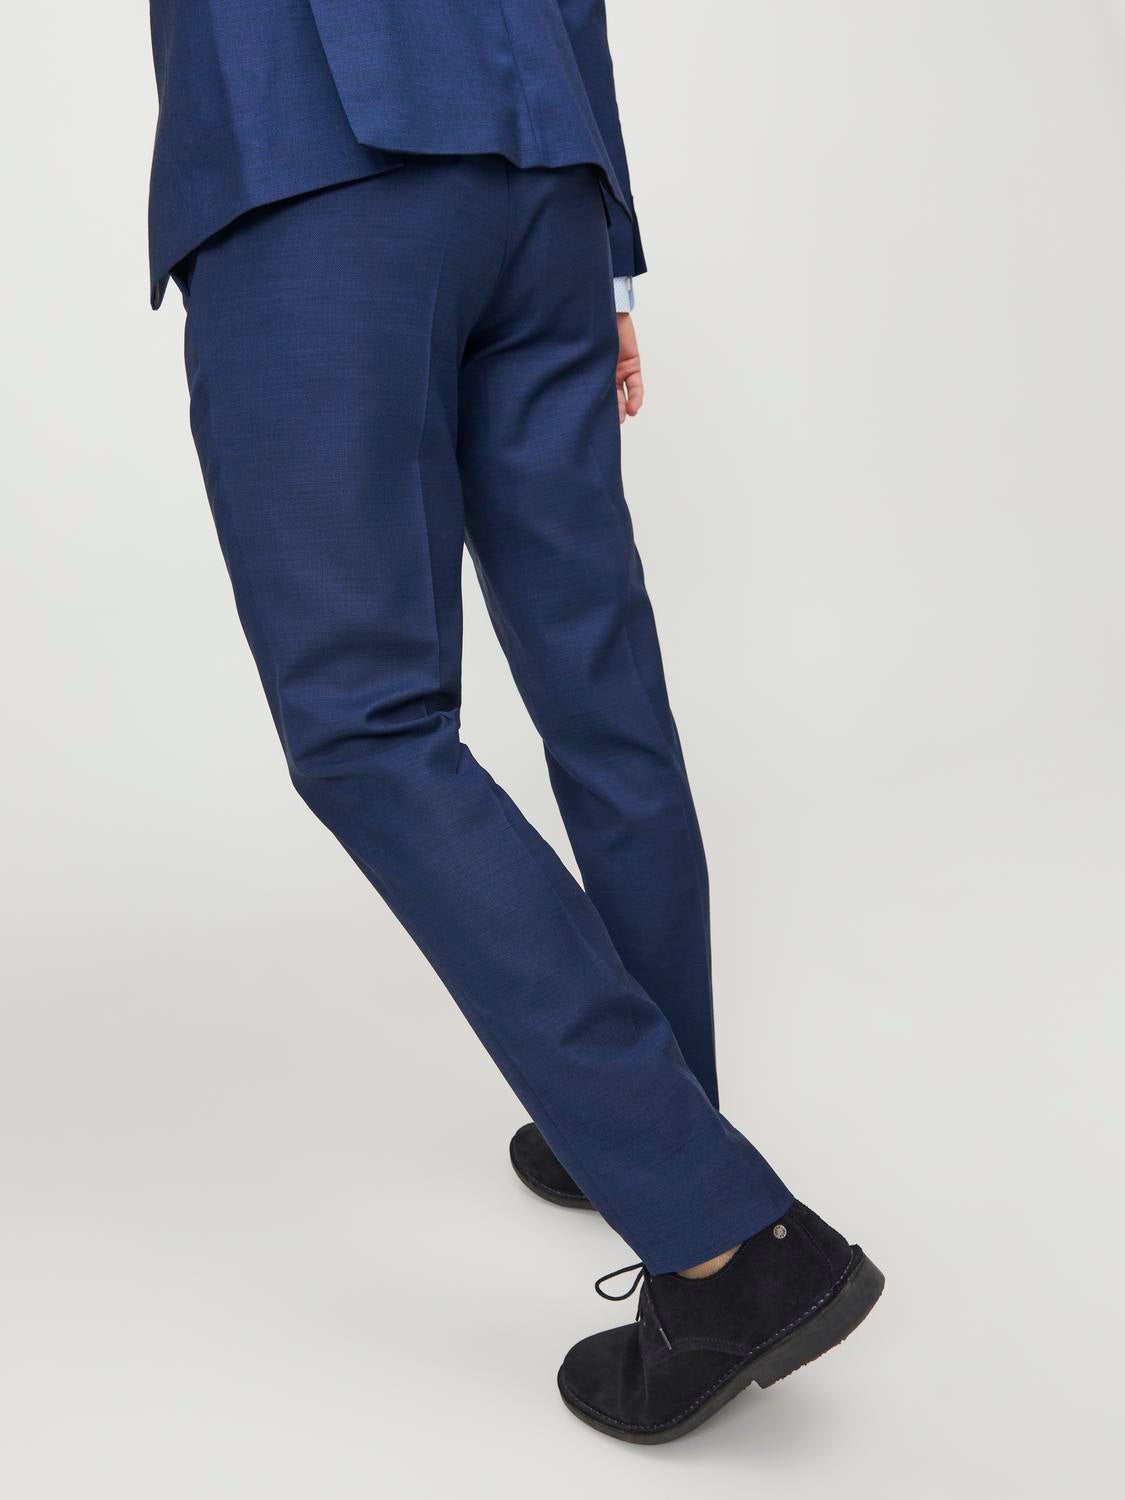 Buy Arrow Mens Micro Check Super Slim Fit Trousers ARAFTR2131Slate Blue  at Amazonin